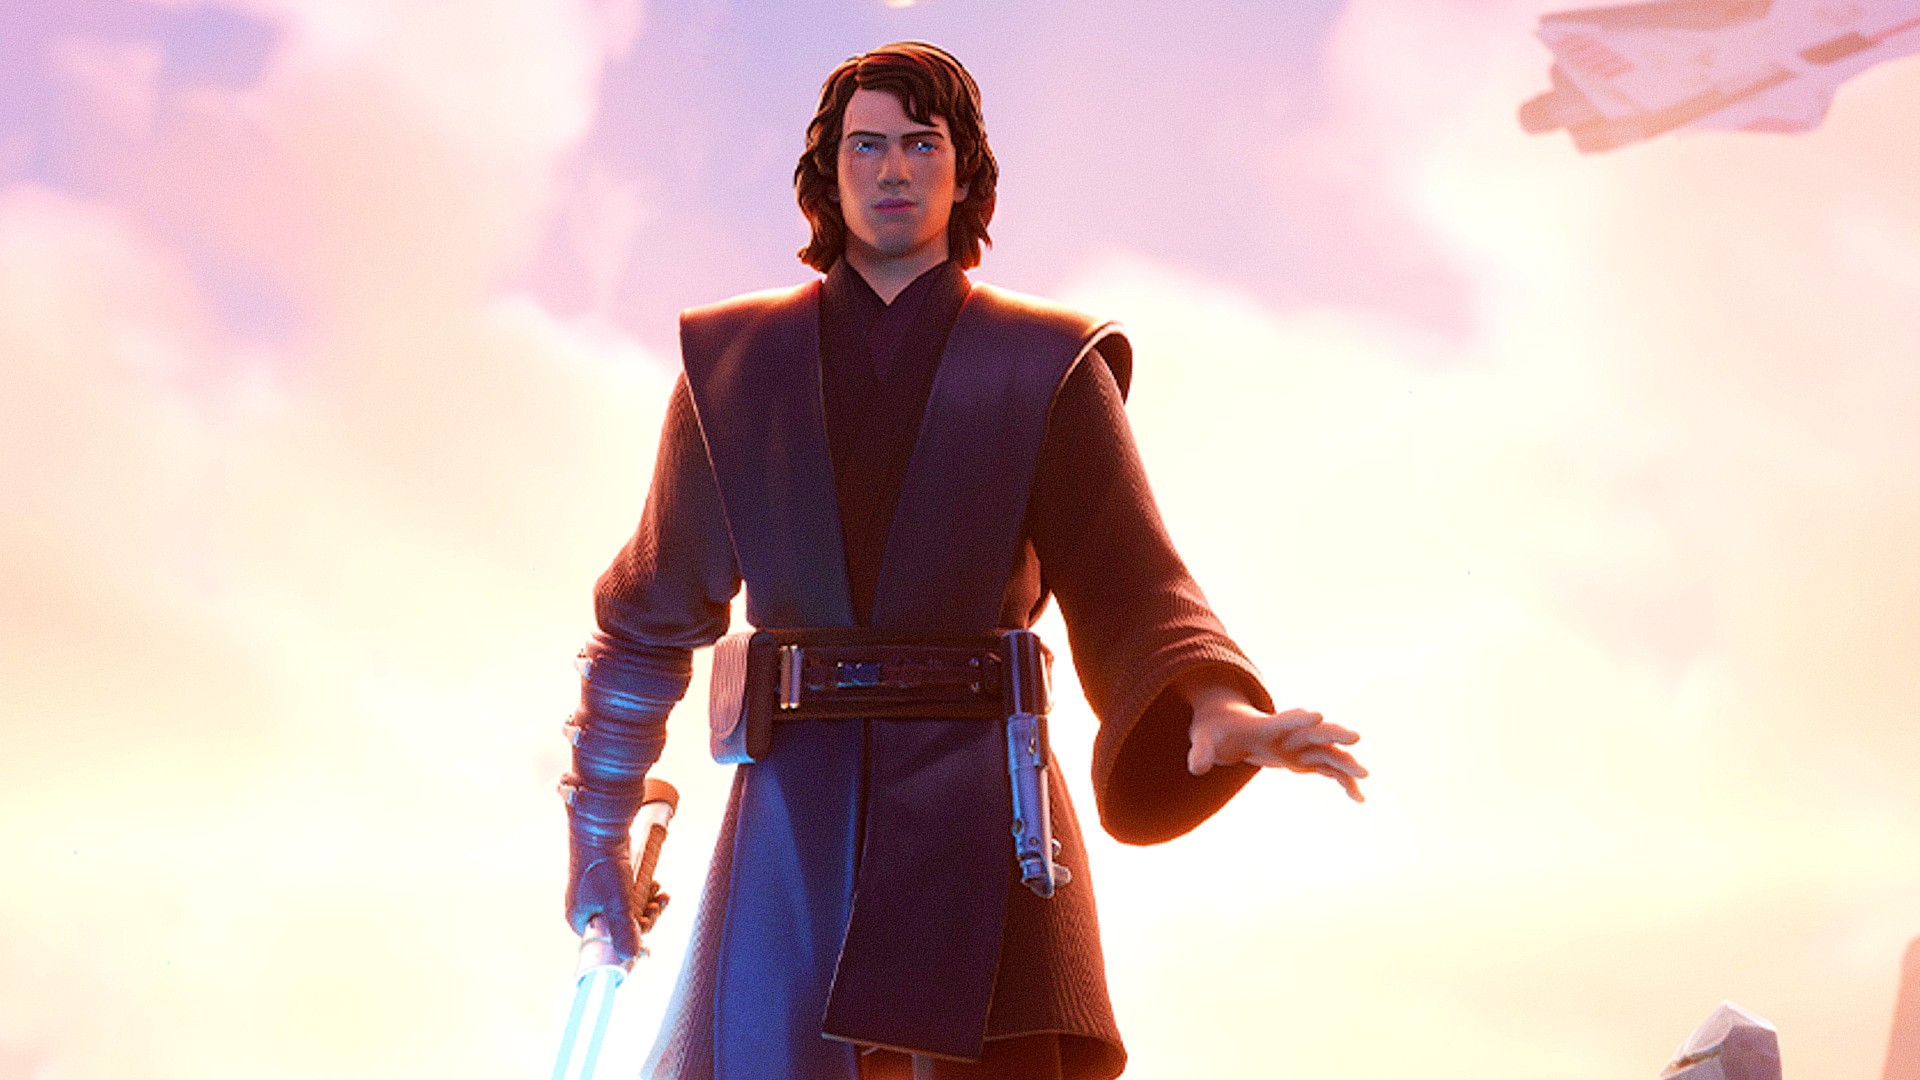 Anakin Skywalker Fortnite skin revealed for Star Wars “experience”